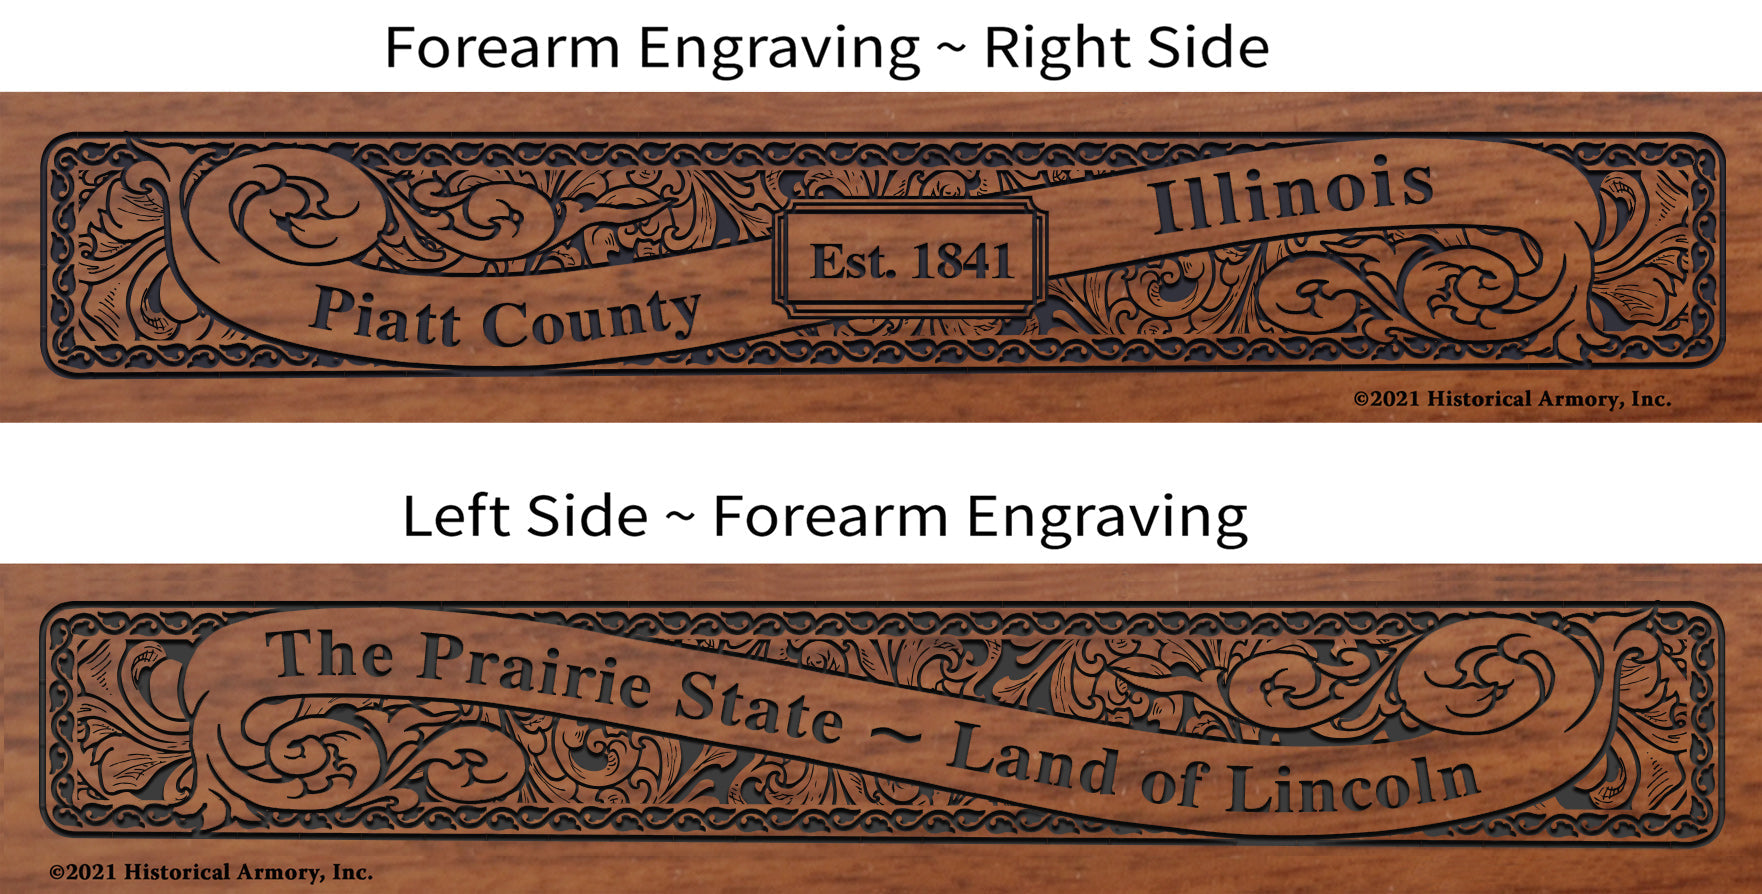 Piatt County Illinois Establishment and Motto History Engraved Rifle Forearm